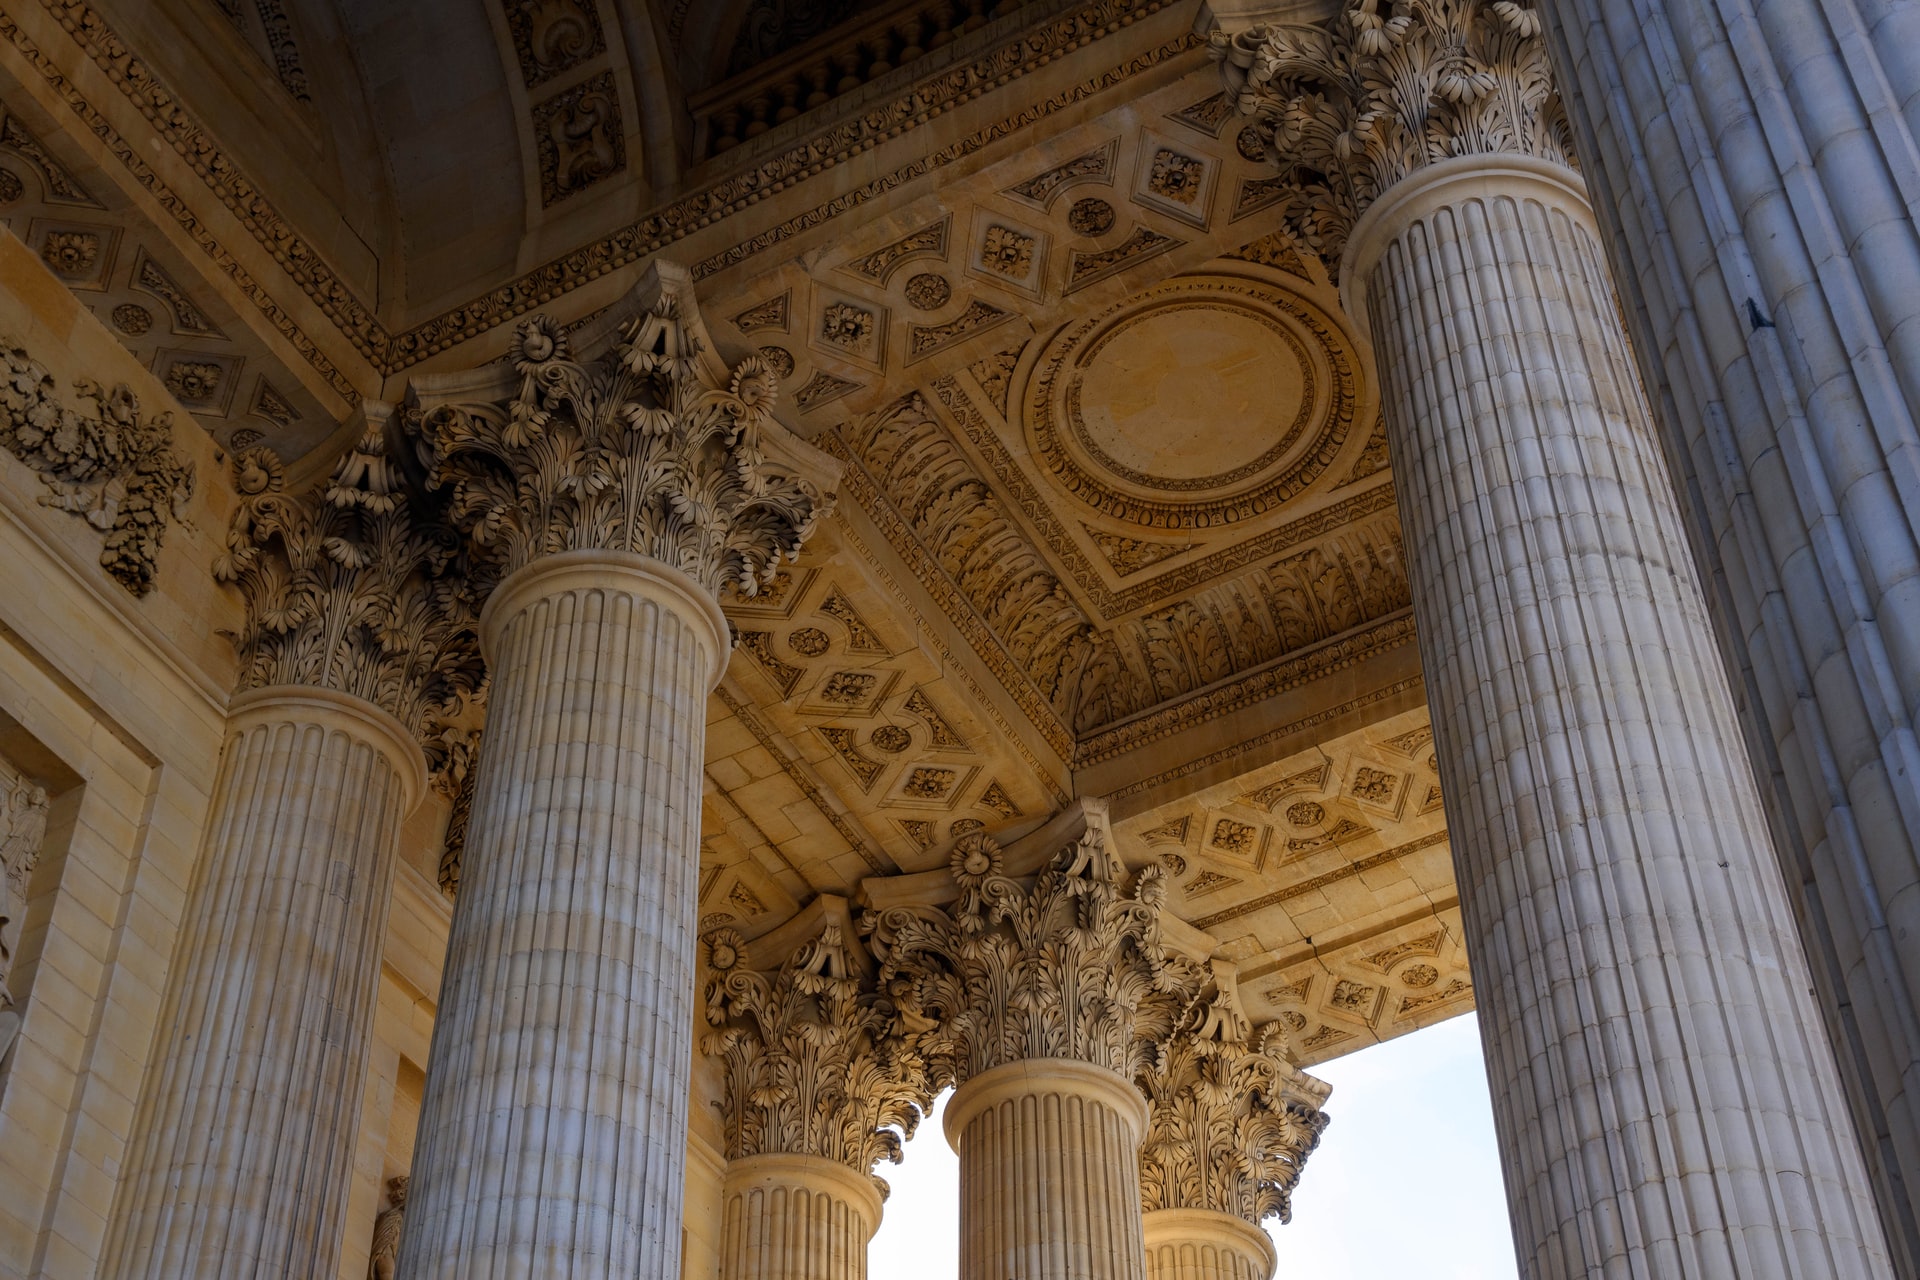 Interior columns in the Pantheon